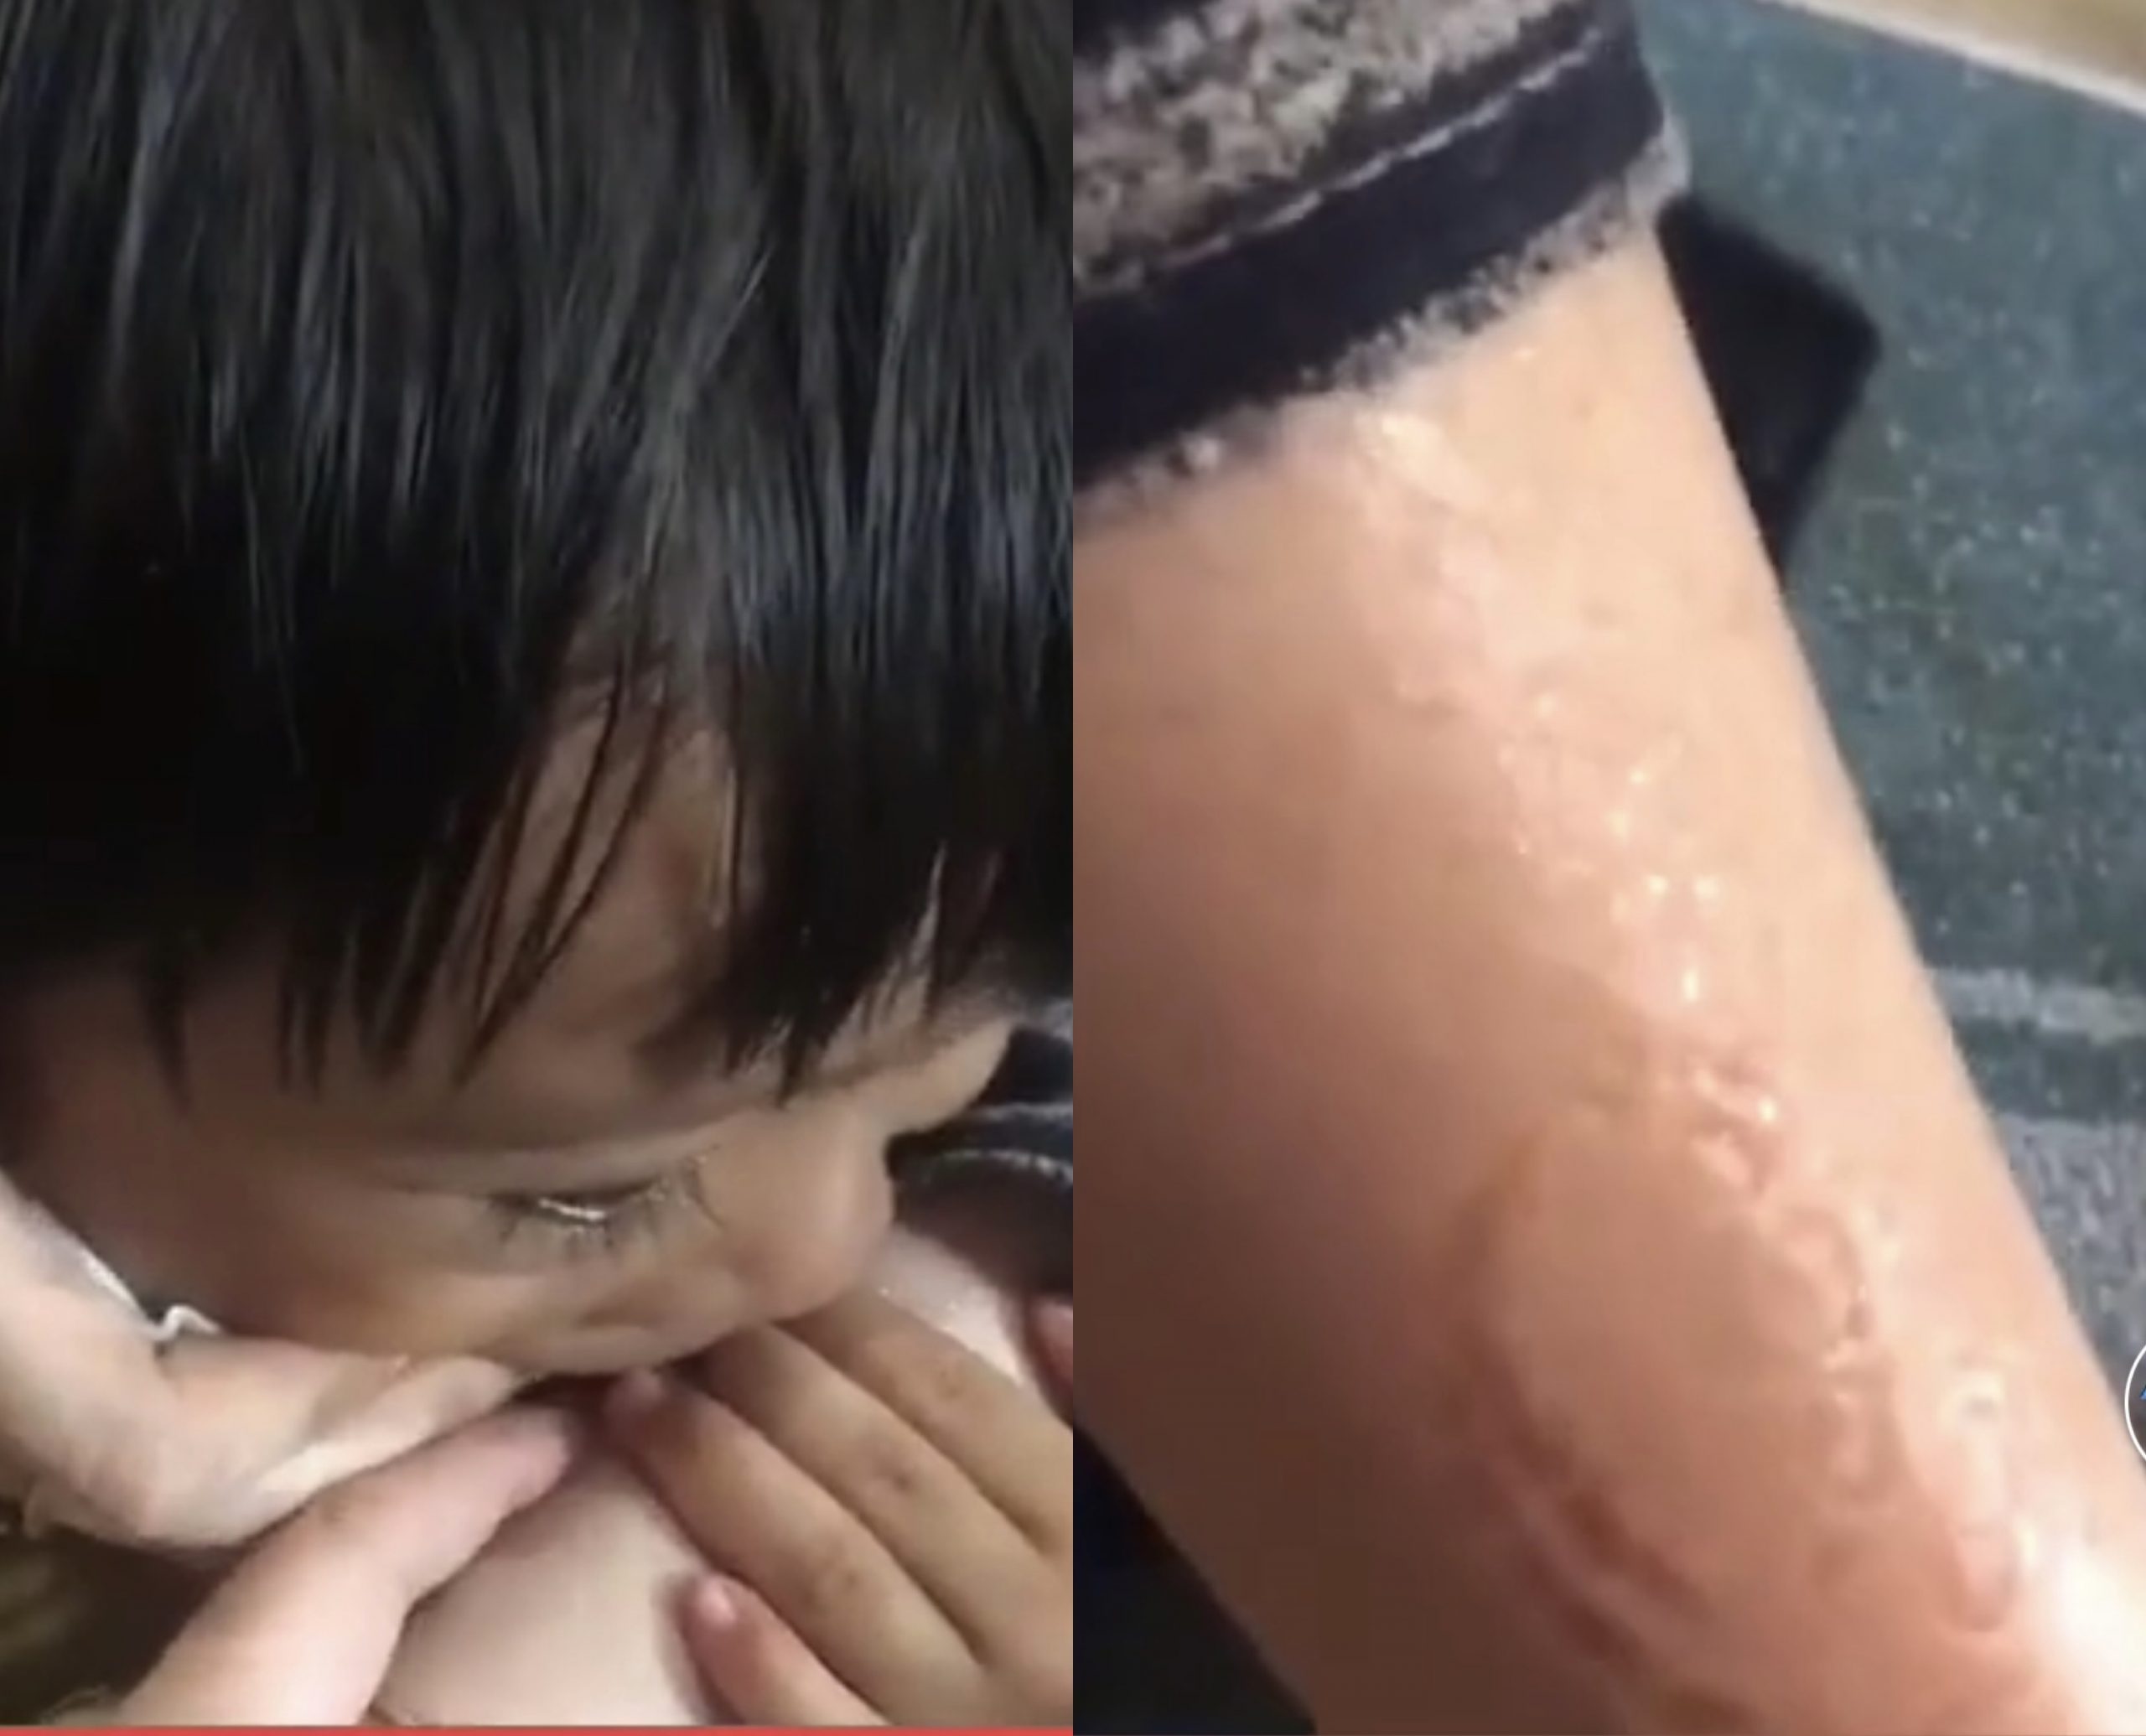 Kongsi Video Anak Gigit Tangan Sampai Lebam, Netizen Tegur Jangan Terlampau Manjakan Anak